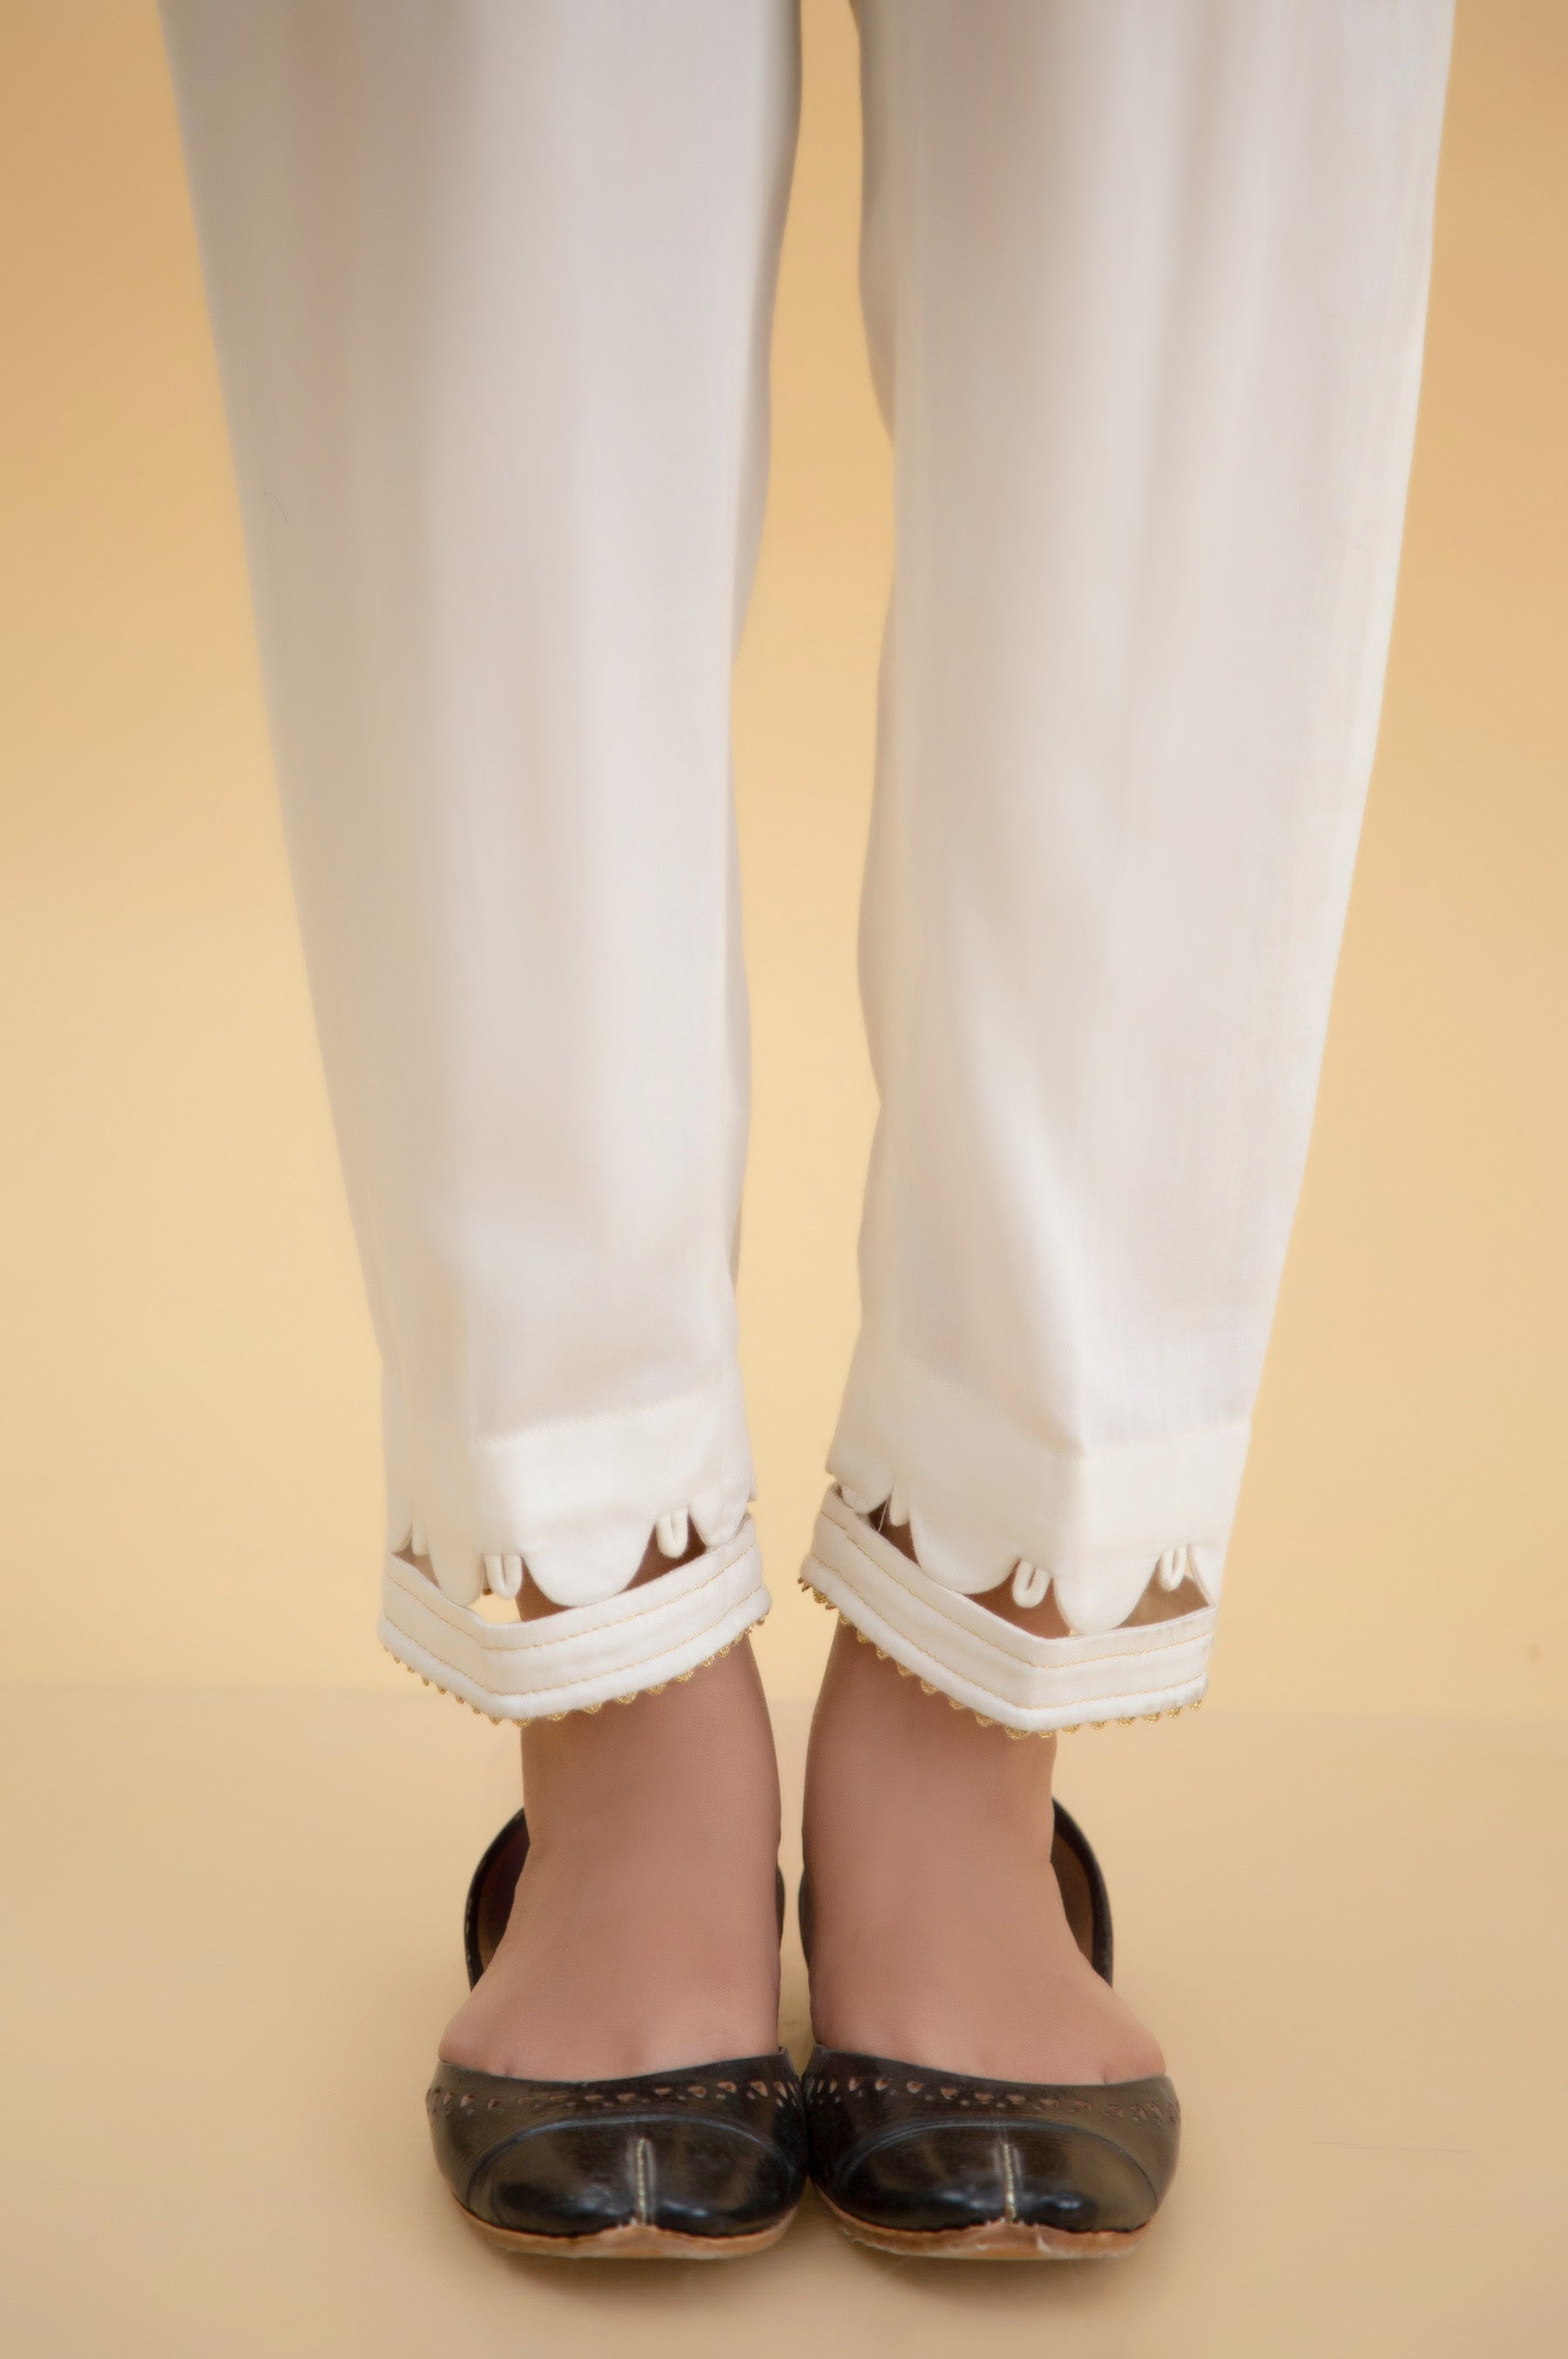 White Straight Pants/Trouser by Zeen in Pakistan, NEW, Free Shipping | eBay